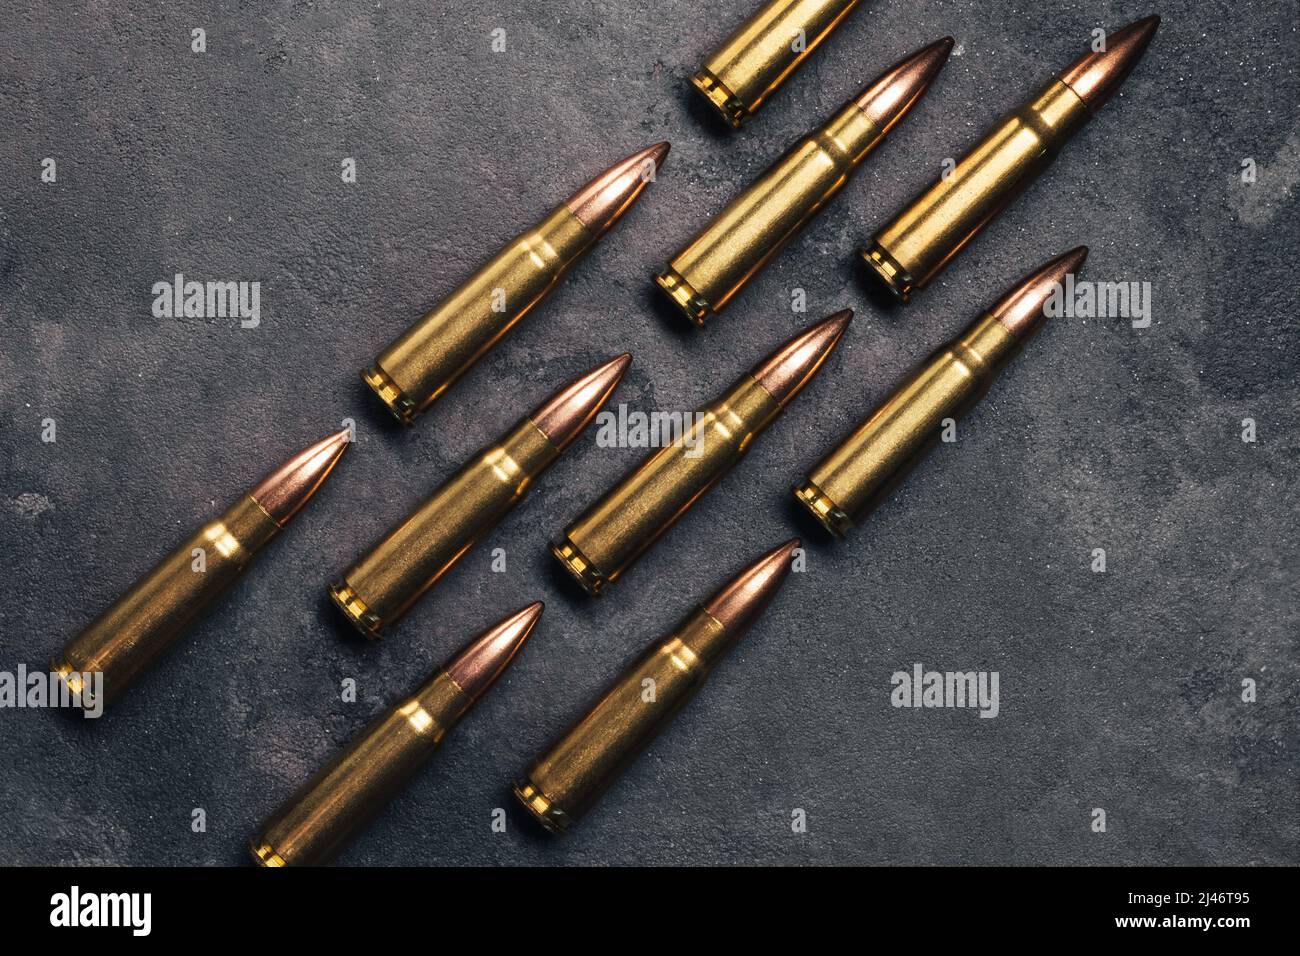 Bullets on gray background. Cartridges 7.62 caliber for Kalashnikov assault rifle. Top view, flat lay Stock Photo